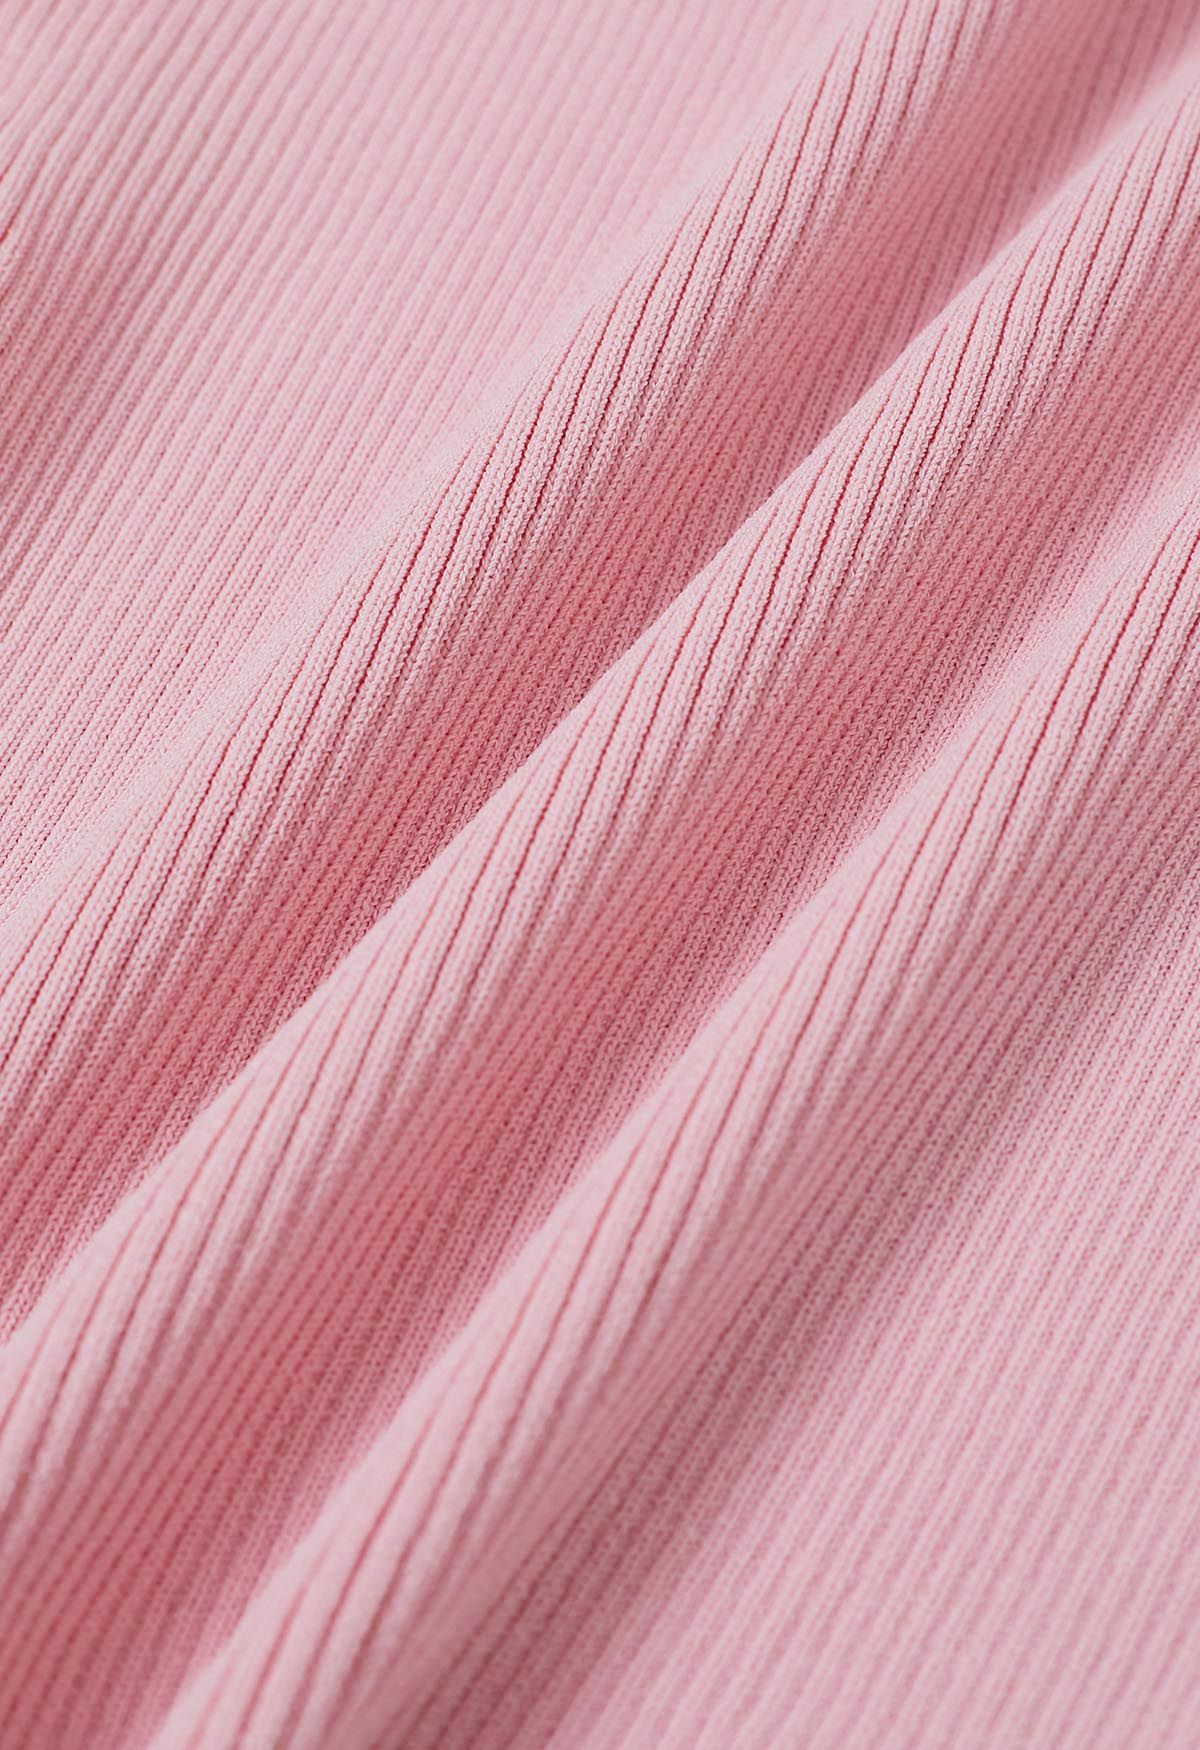 Cutwork الرباط رفرفة الأكمام تقسم أعلى متماسكة باللون الوردي